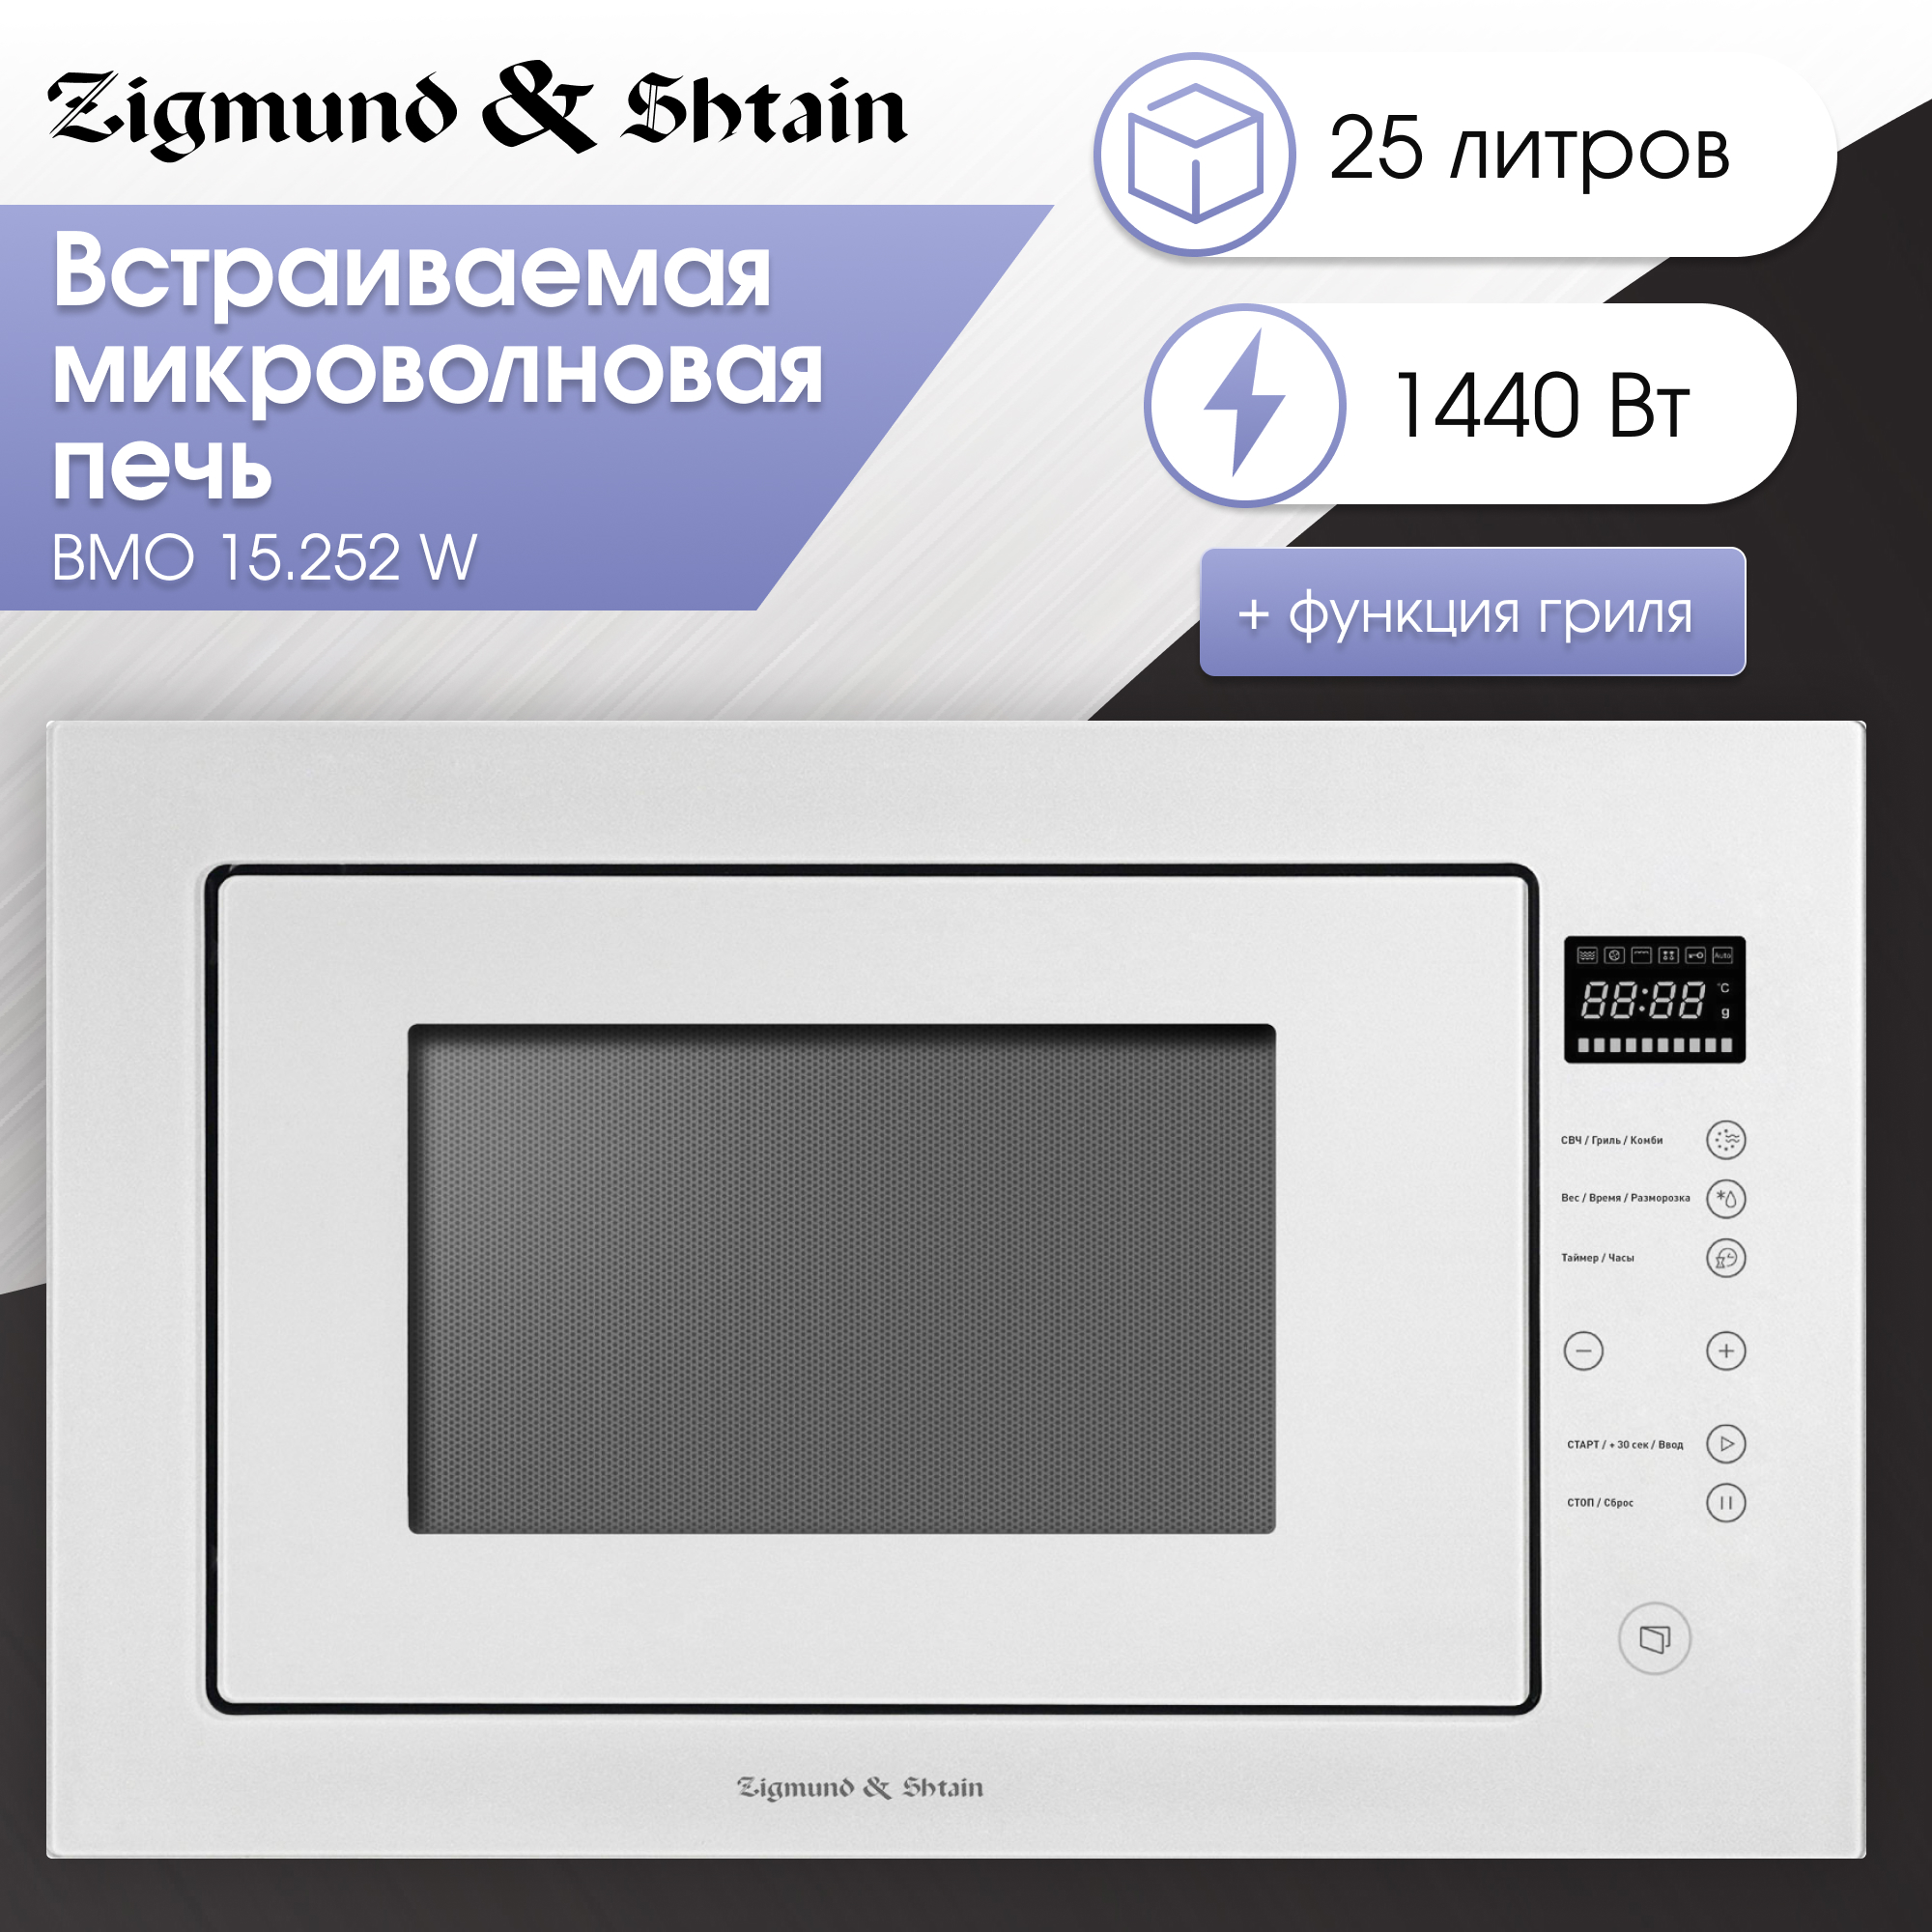 Встраиваемая микроволновая печь Zigmund & Shtain BMO 15.252 W White встраиваемая микроволновая печь zigmund